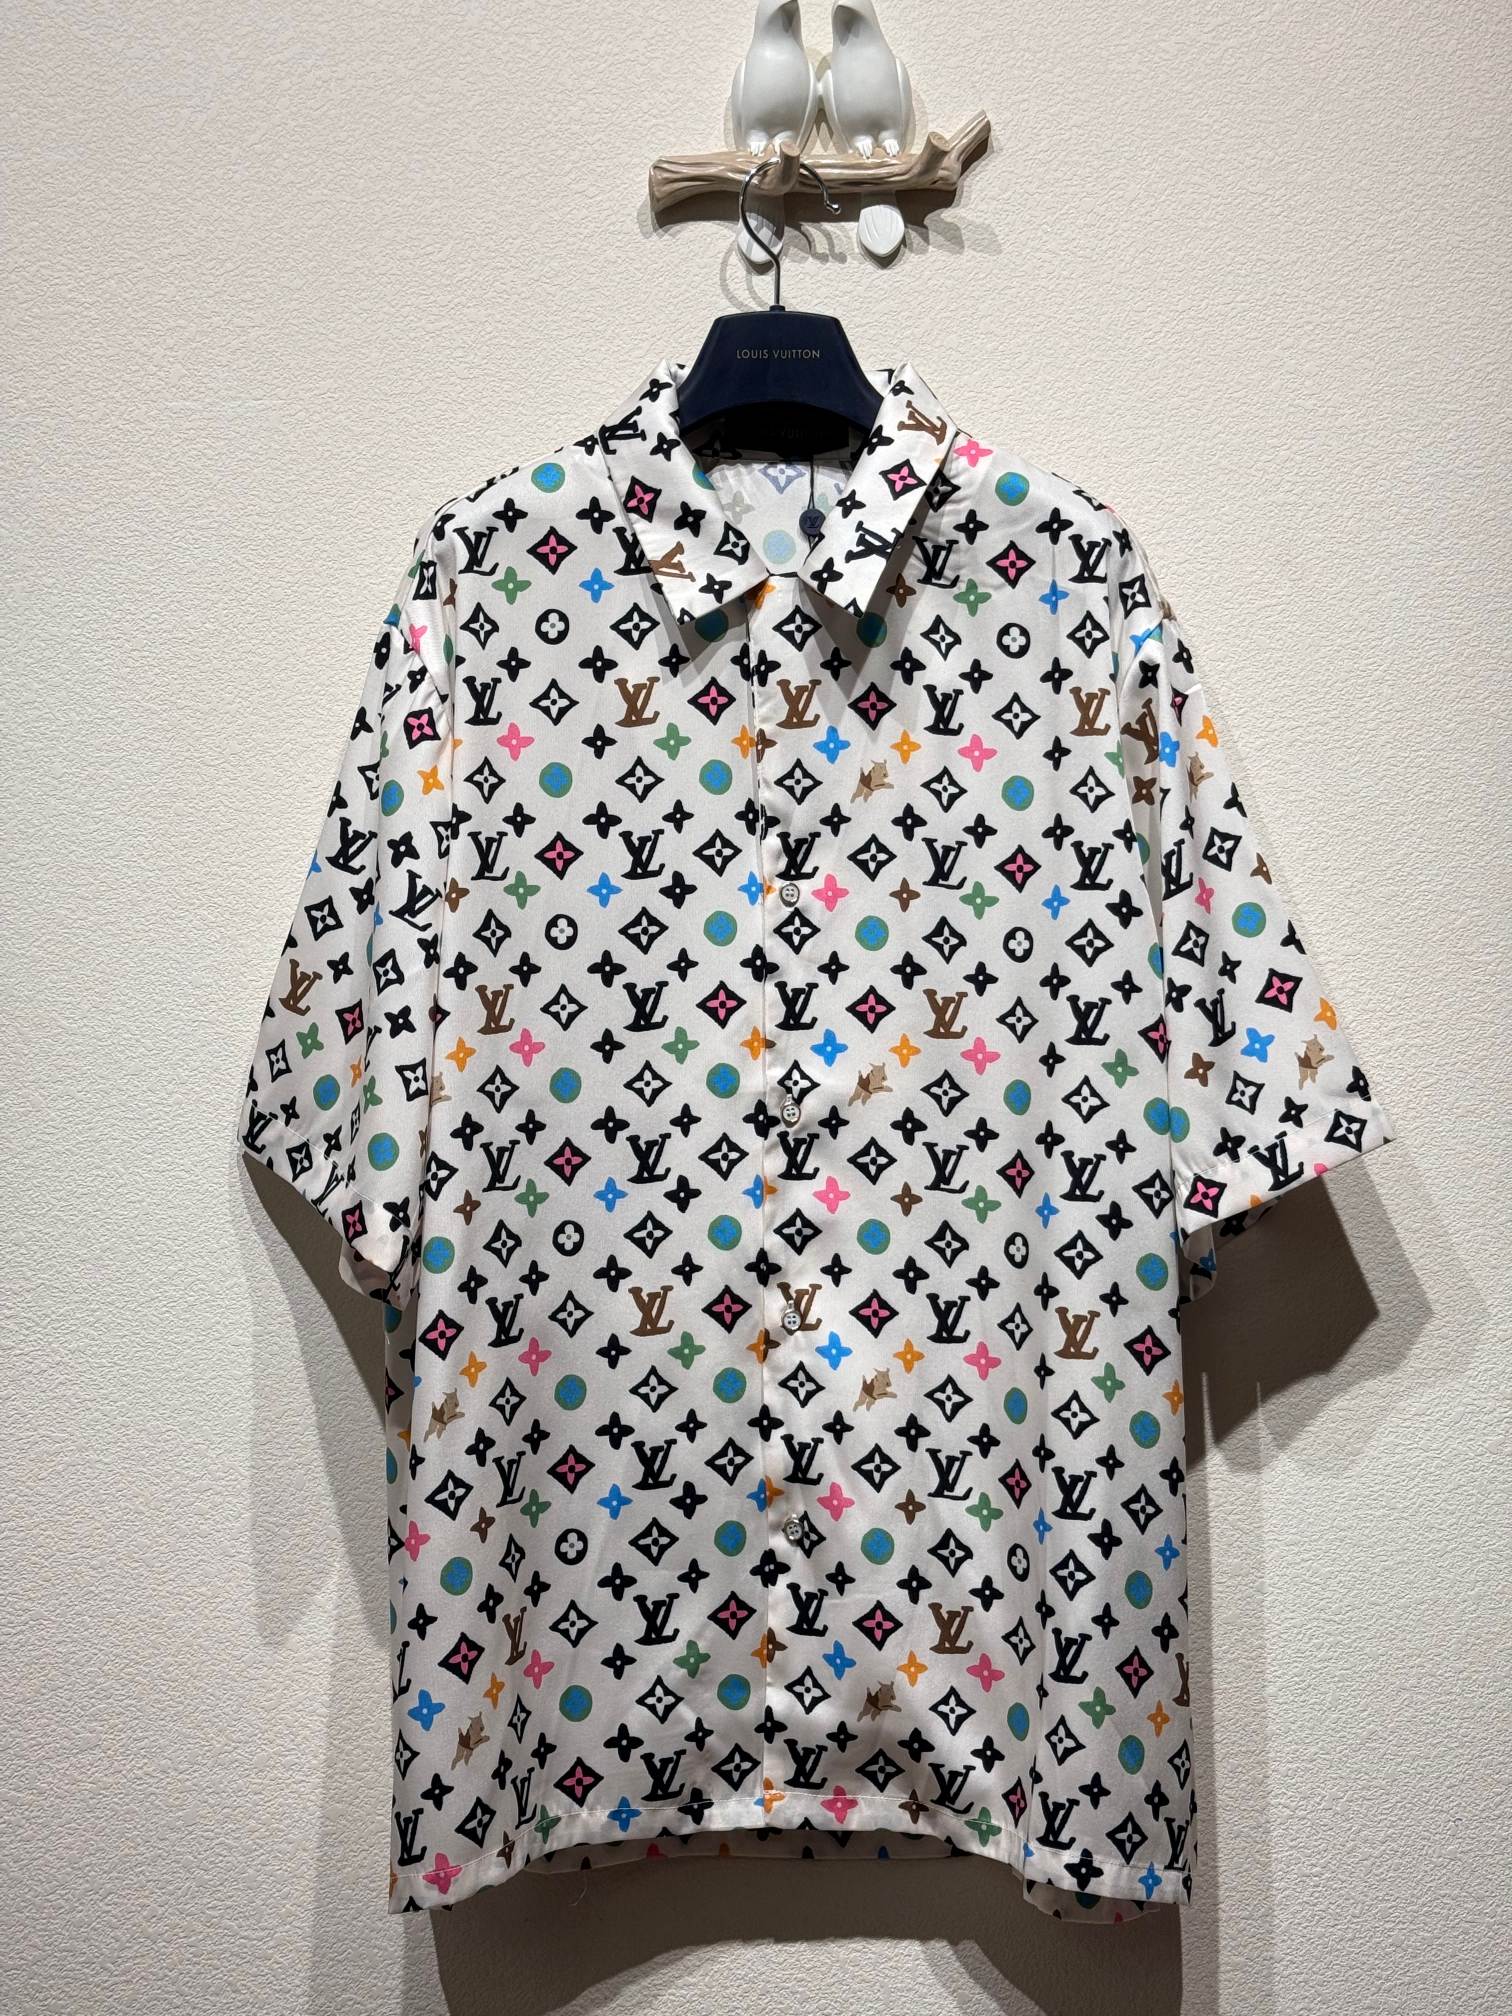 Louis Vuitton Kopen Kleding Overhemden Zomercollectie